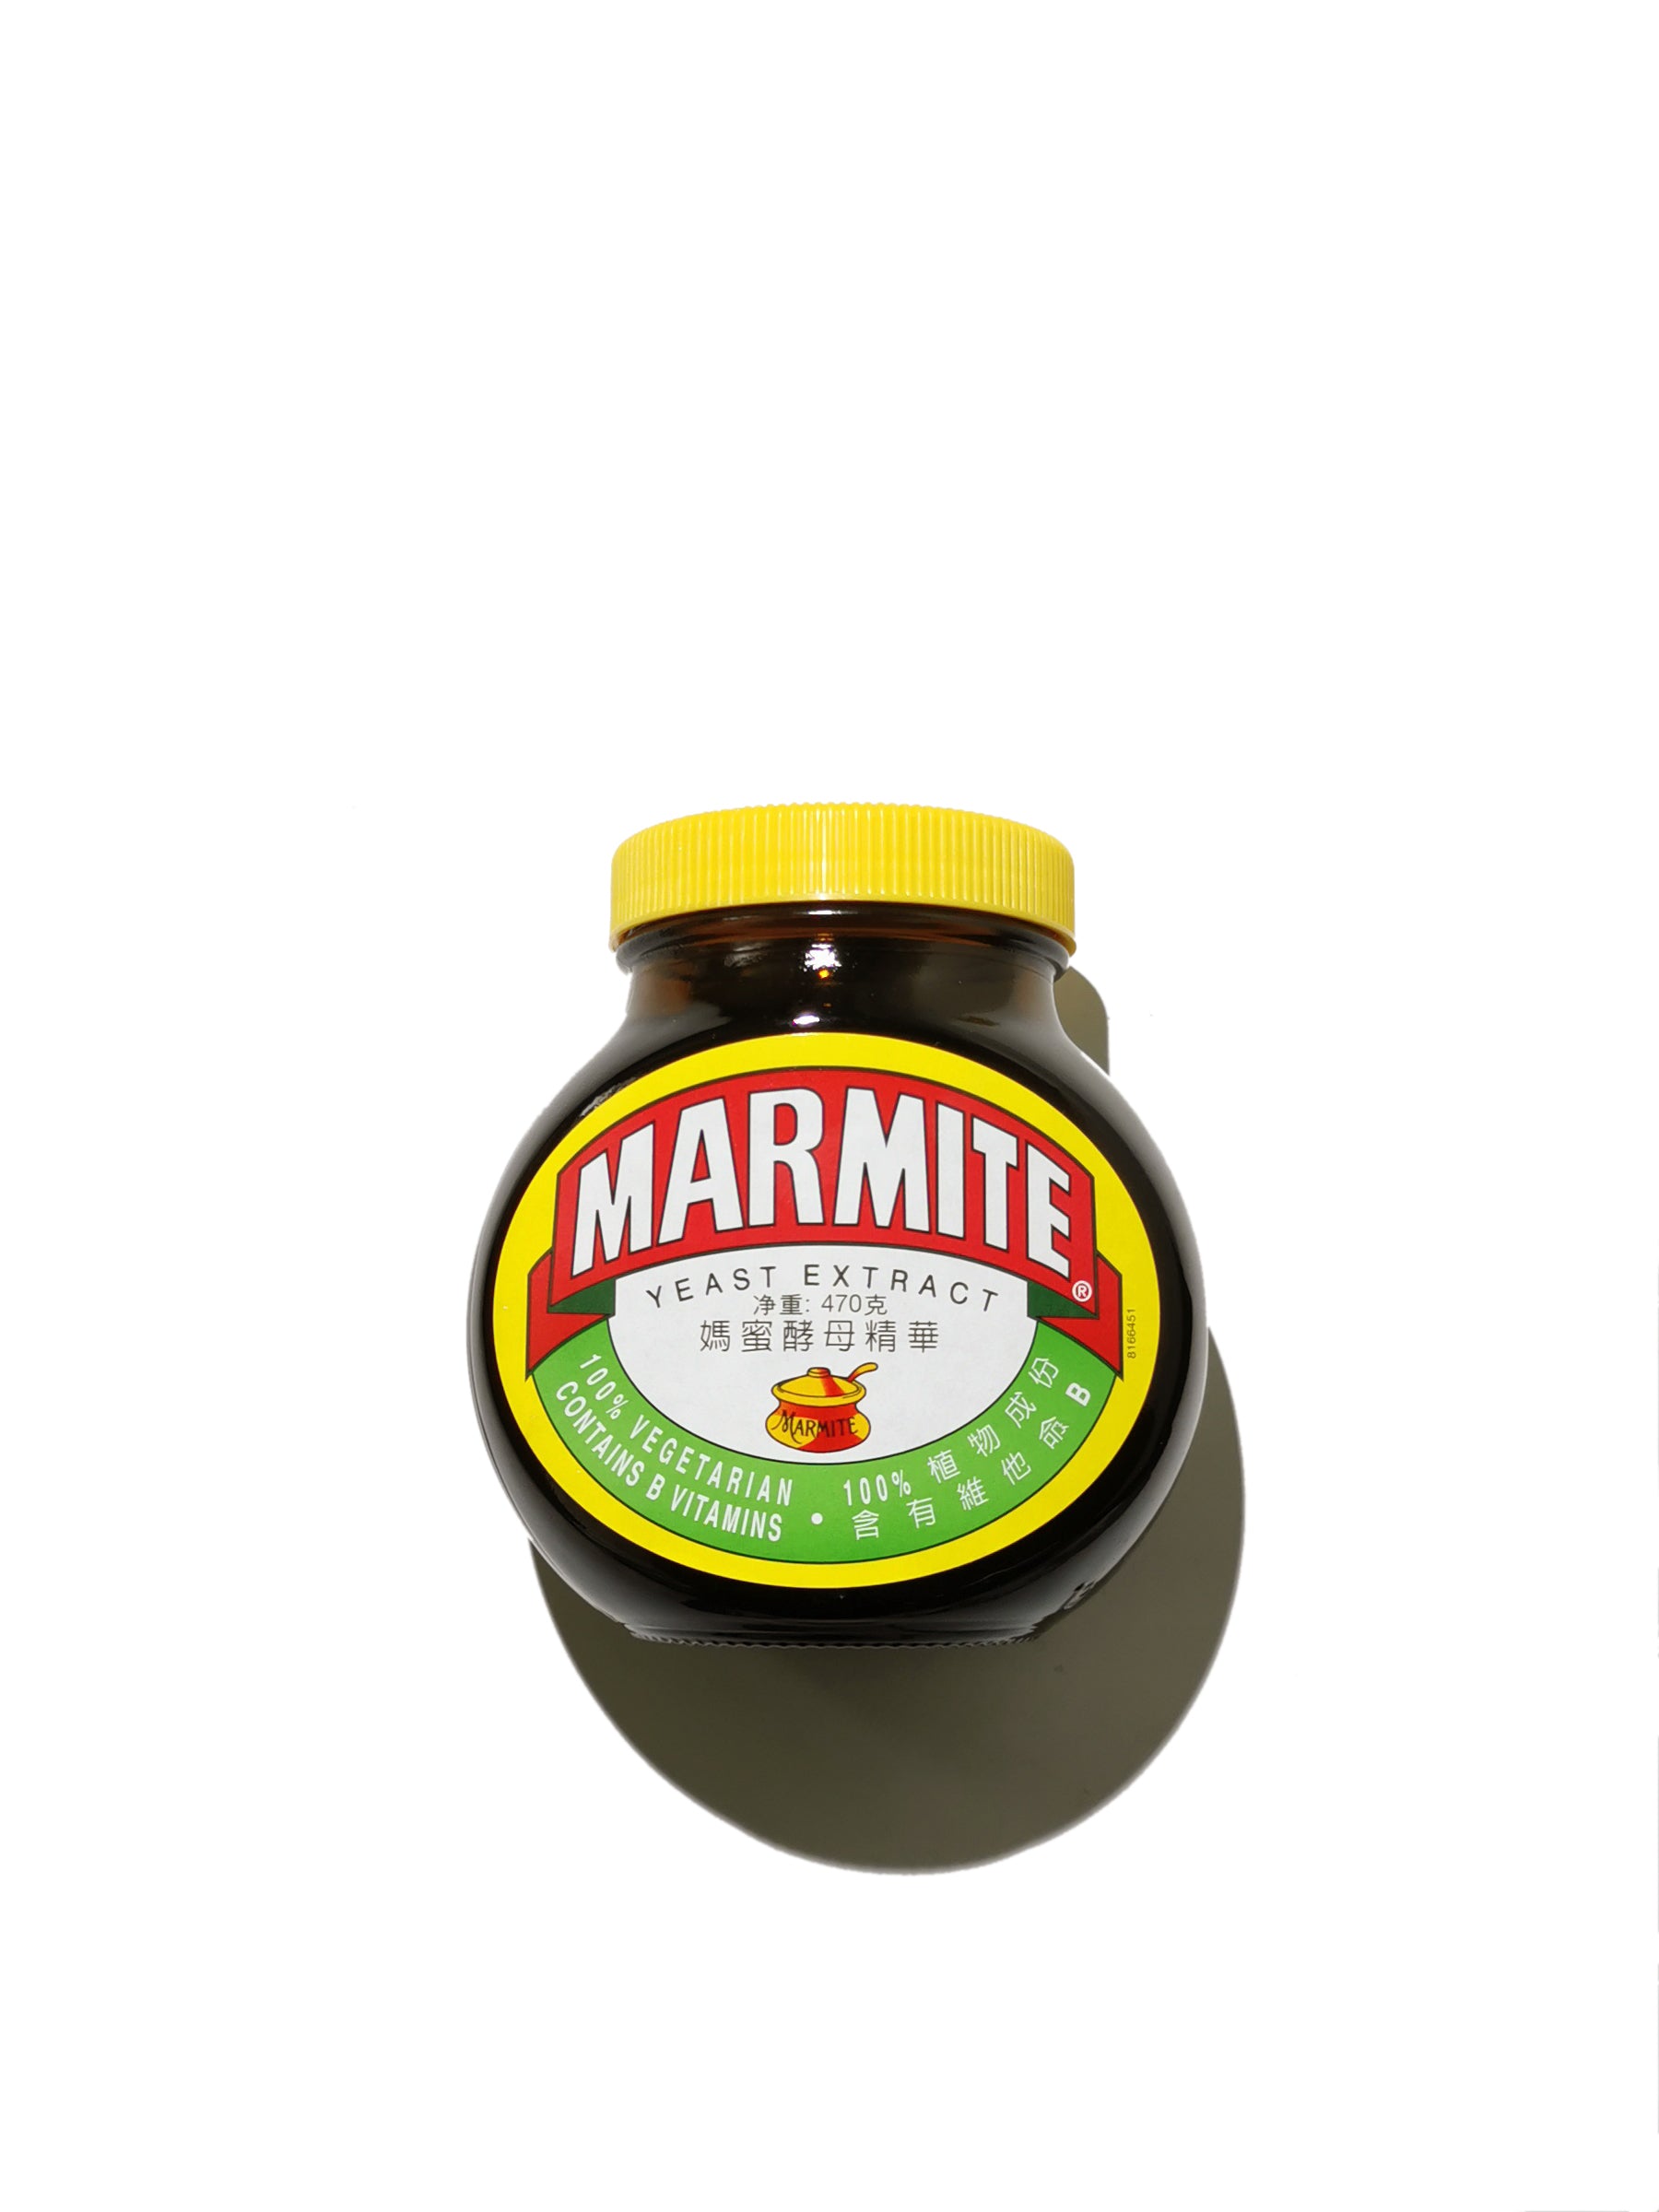 Marmite 媽蜜酵母精華 - 470g